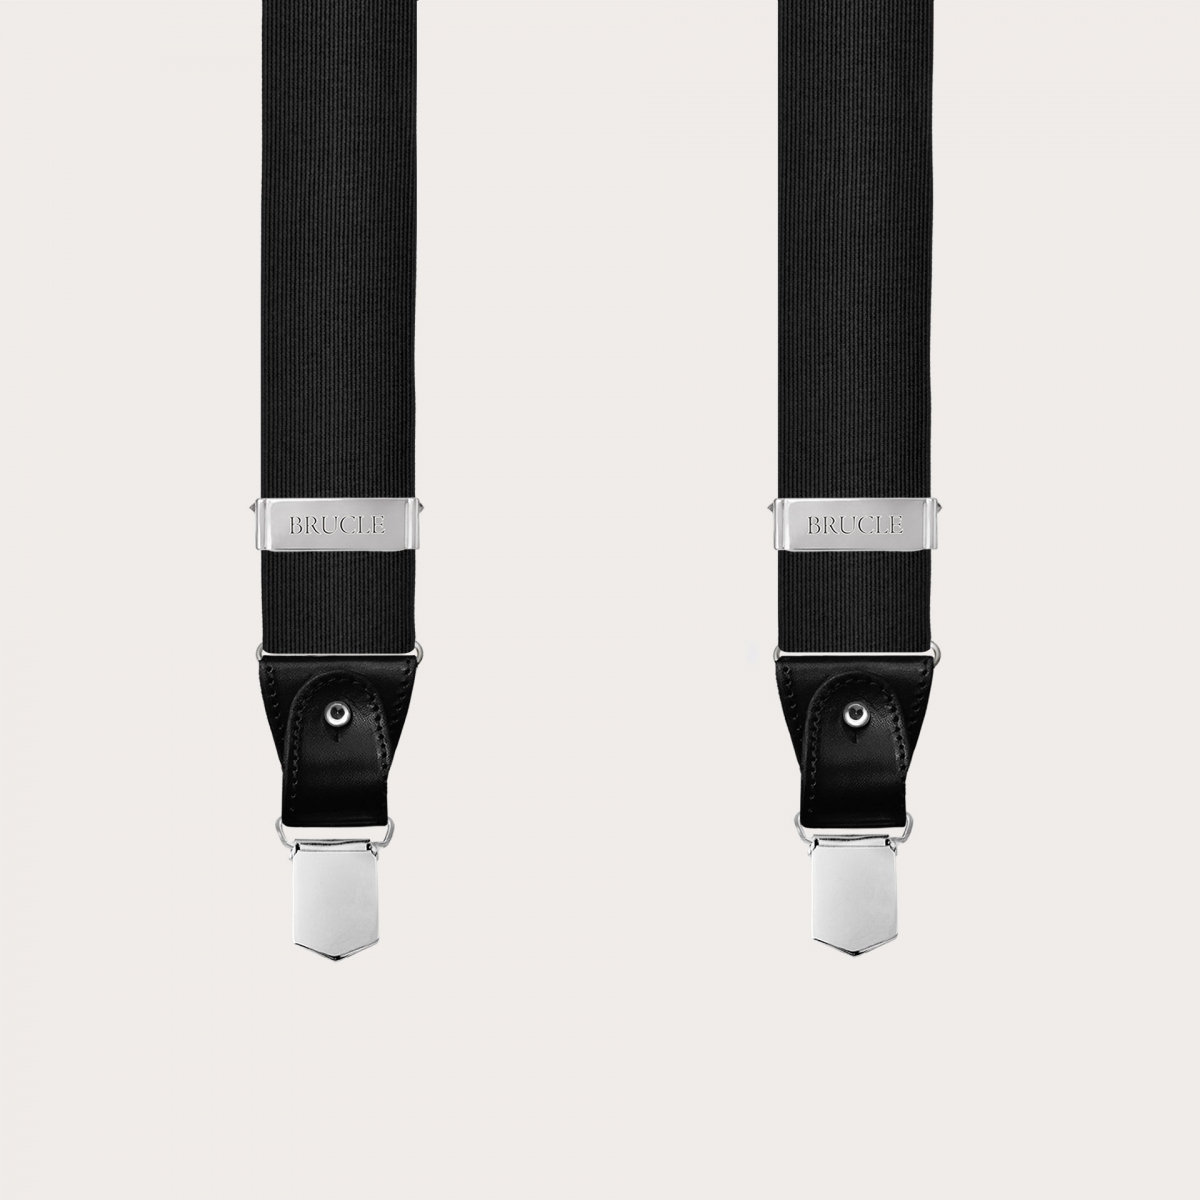 Formal Y-shape tubular suspenders, black